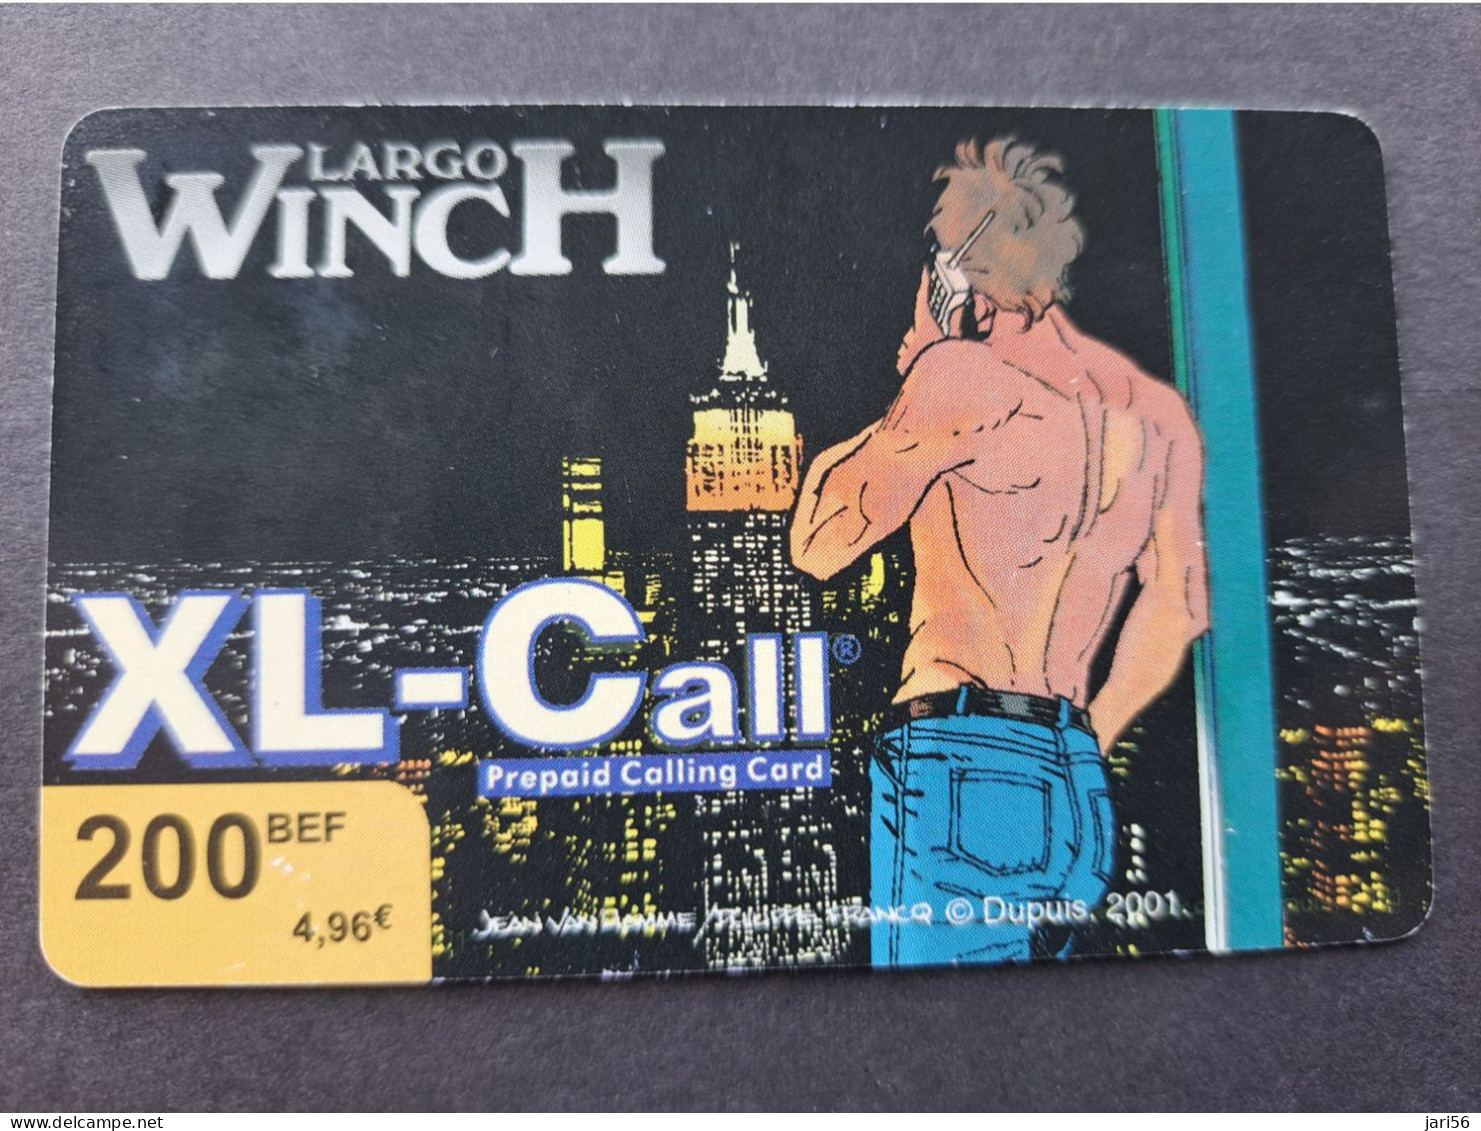 BELGIUM / XL-CALL € 4,96  /  LARGO- WINCH PREPAID /CITY BY NIGHT/    USED  CARD  ** 16617 ** - Senza Chip